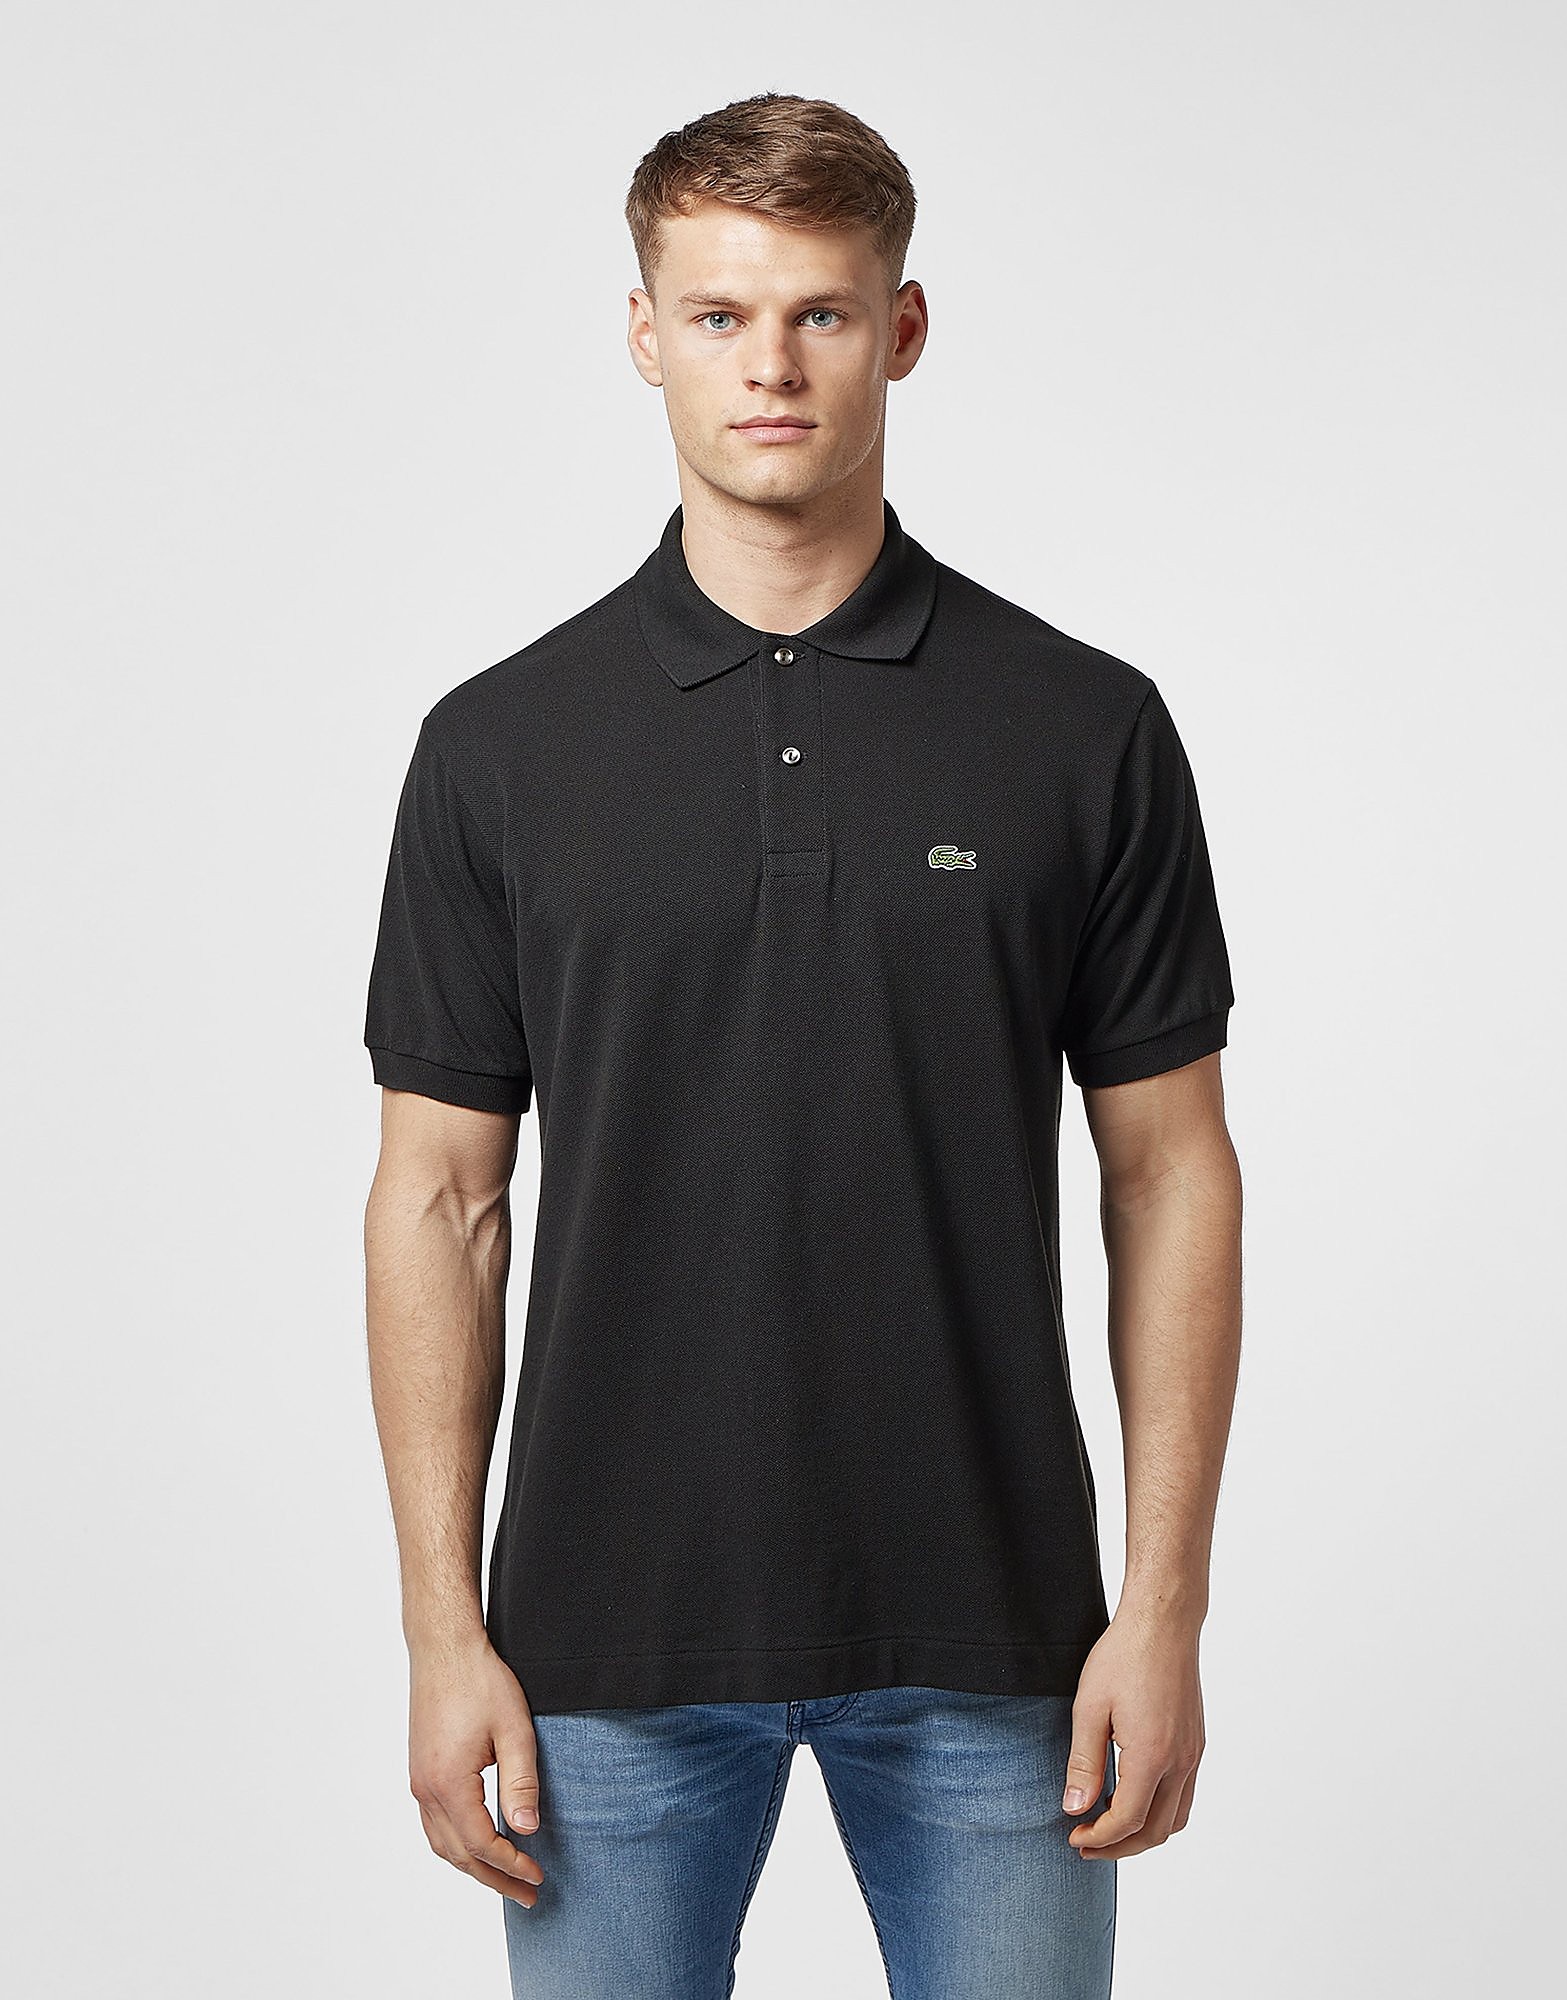 Lacoste Men's L1212 Polo Shirt - Black, Black